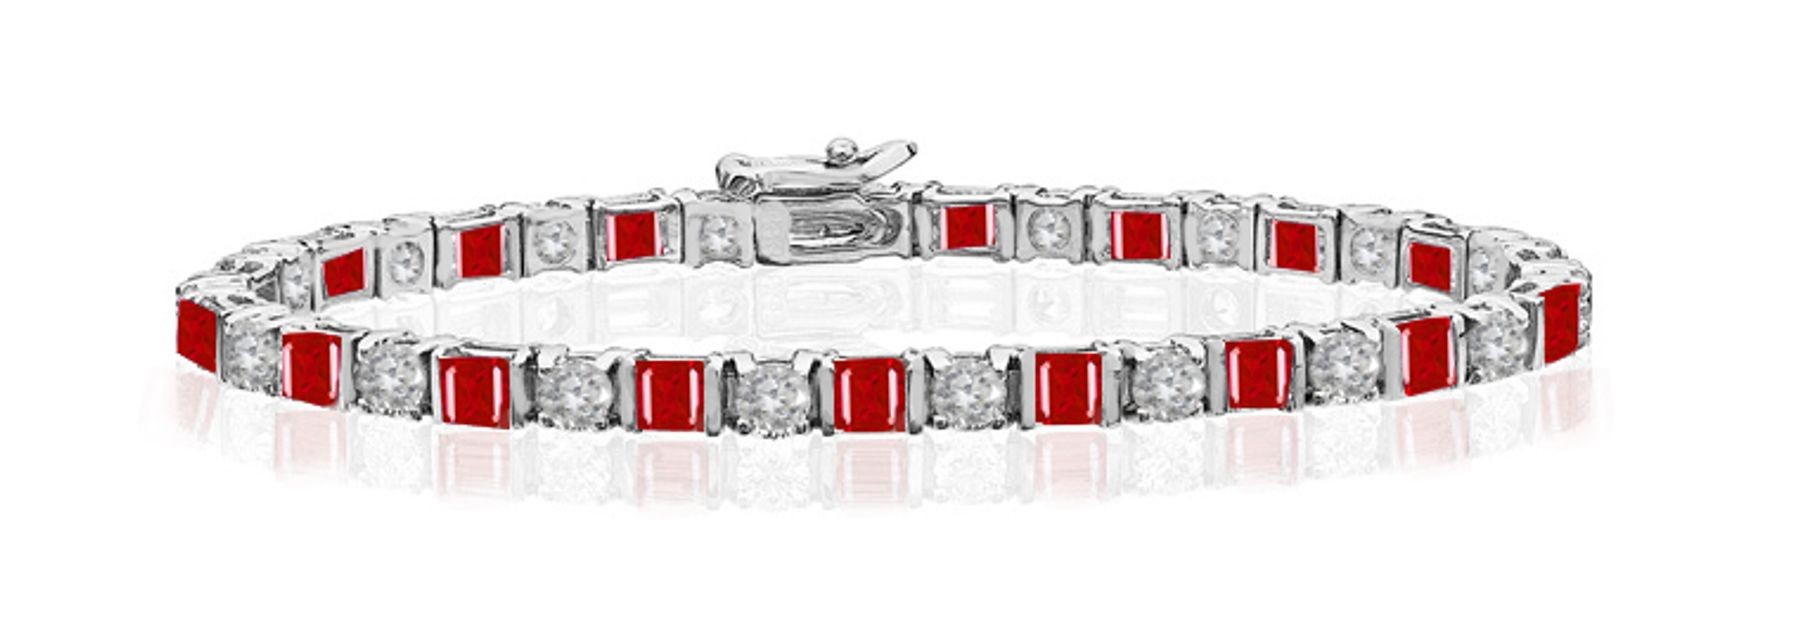 Premier Designer Colored Gemstone Jewelry Collection: New Ruby & Diamond Interlocking Bracelet and Necklace